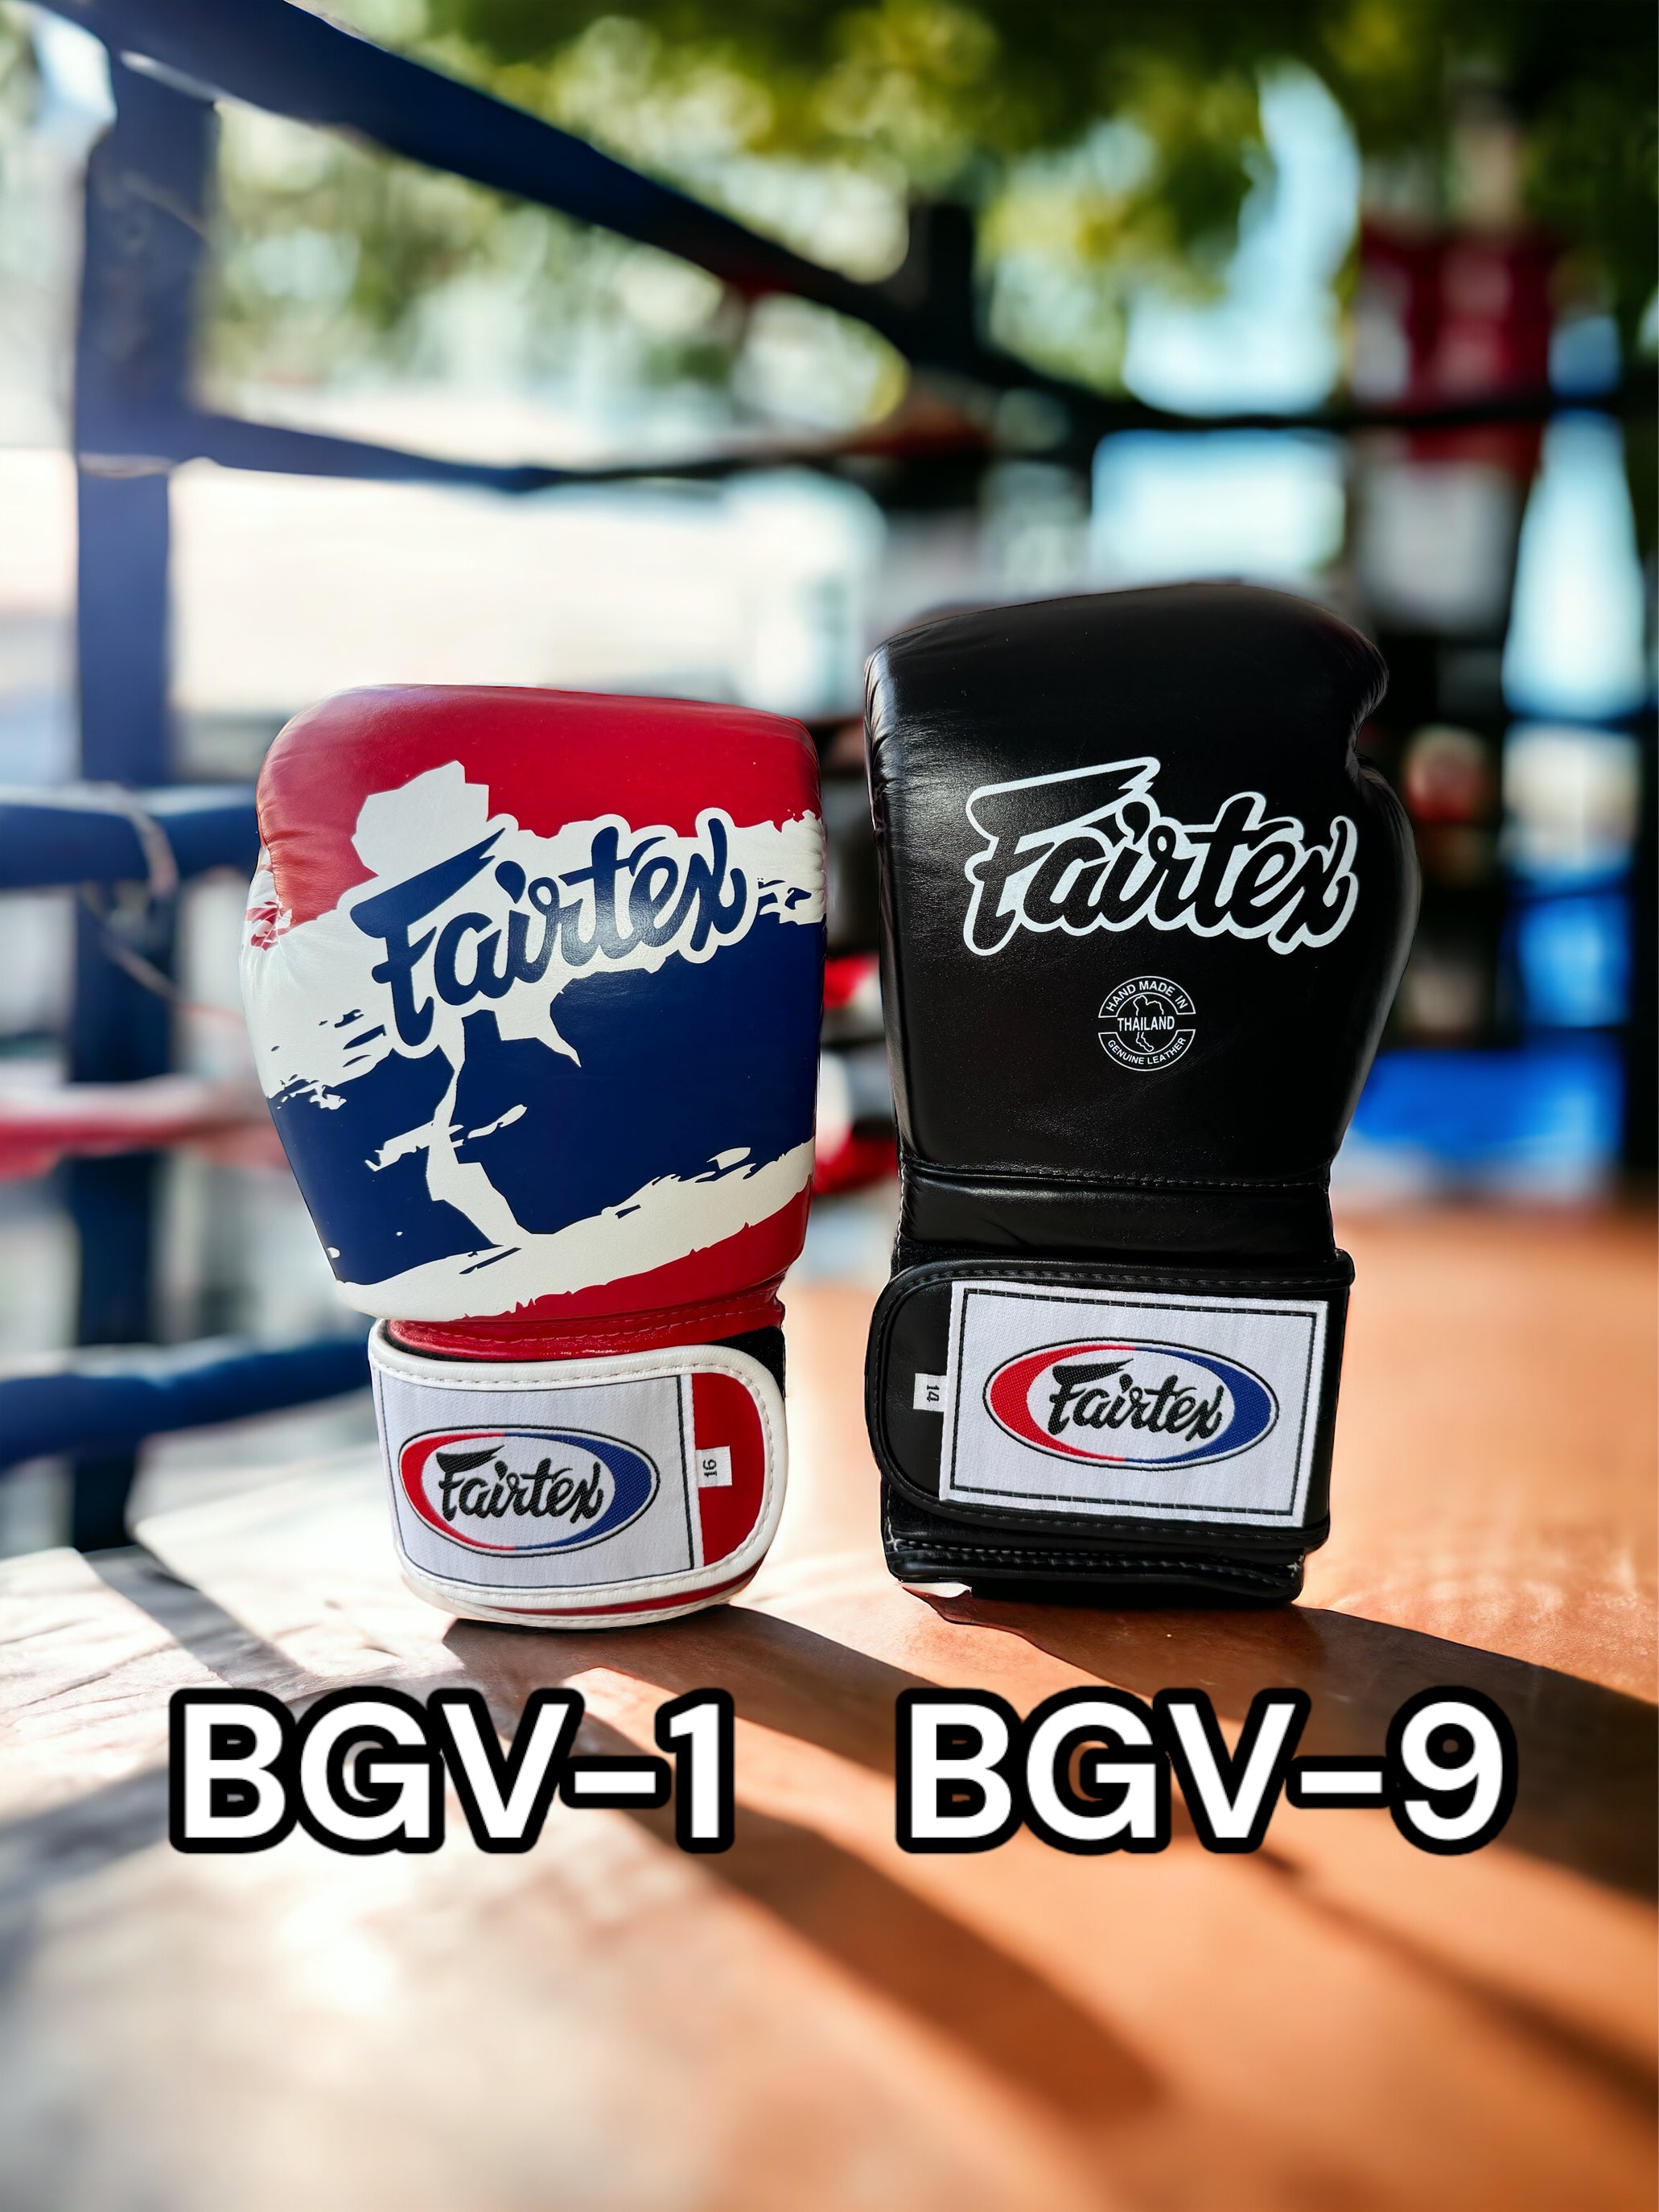 fairtex boxing gloves in thai flag colour bgv1 model, next to bgv9 model in black colour